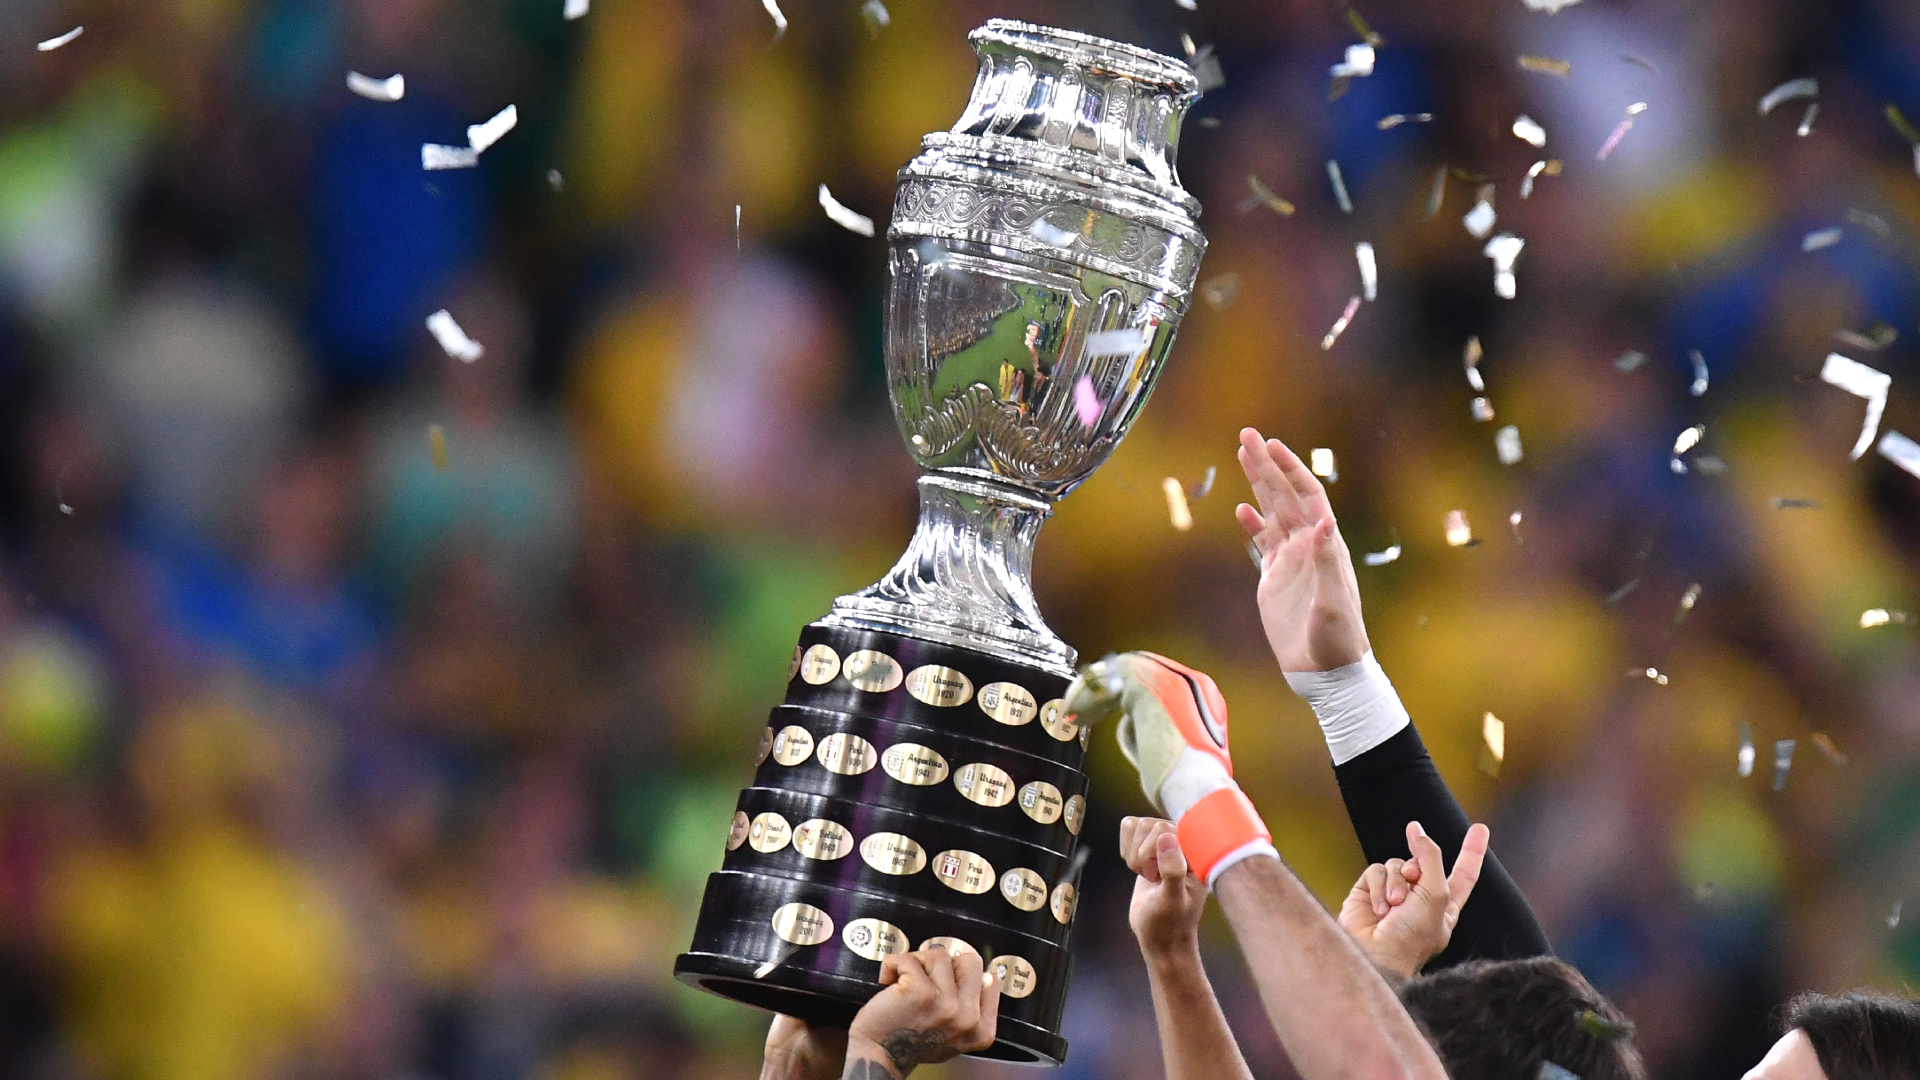 Trofeo Copa América 2019